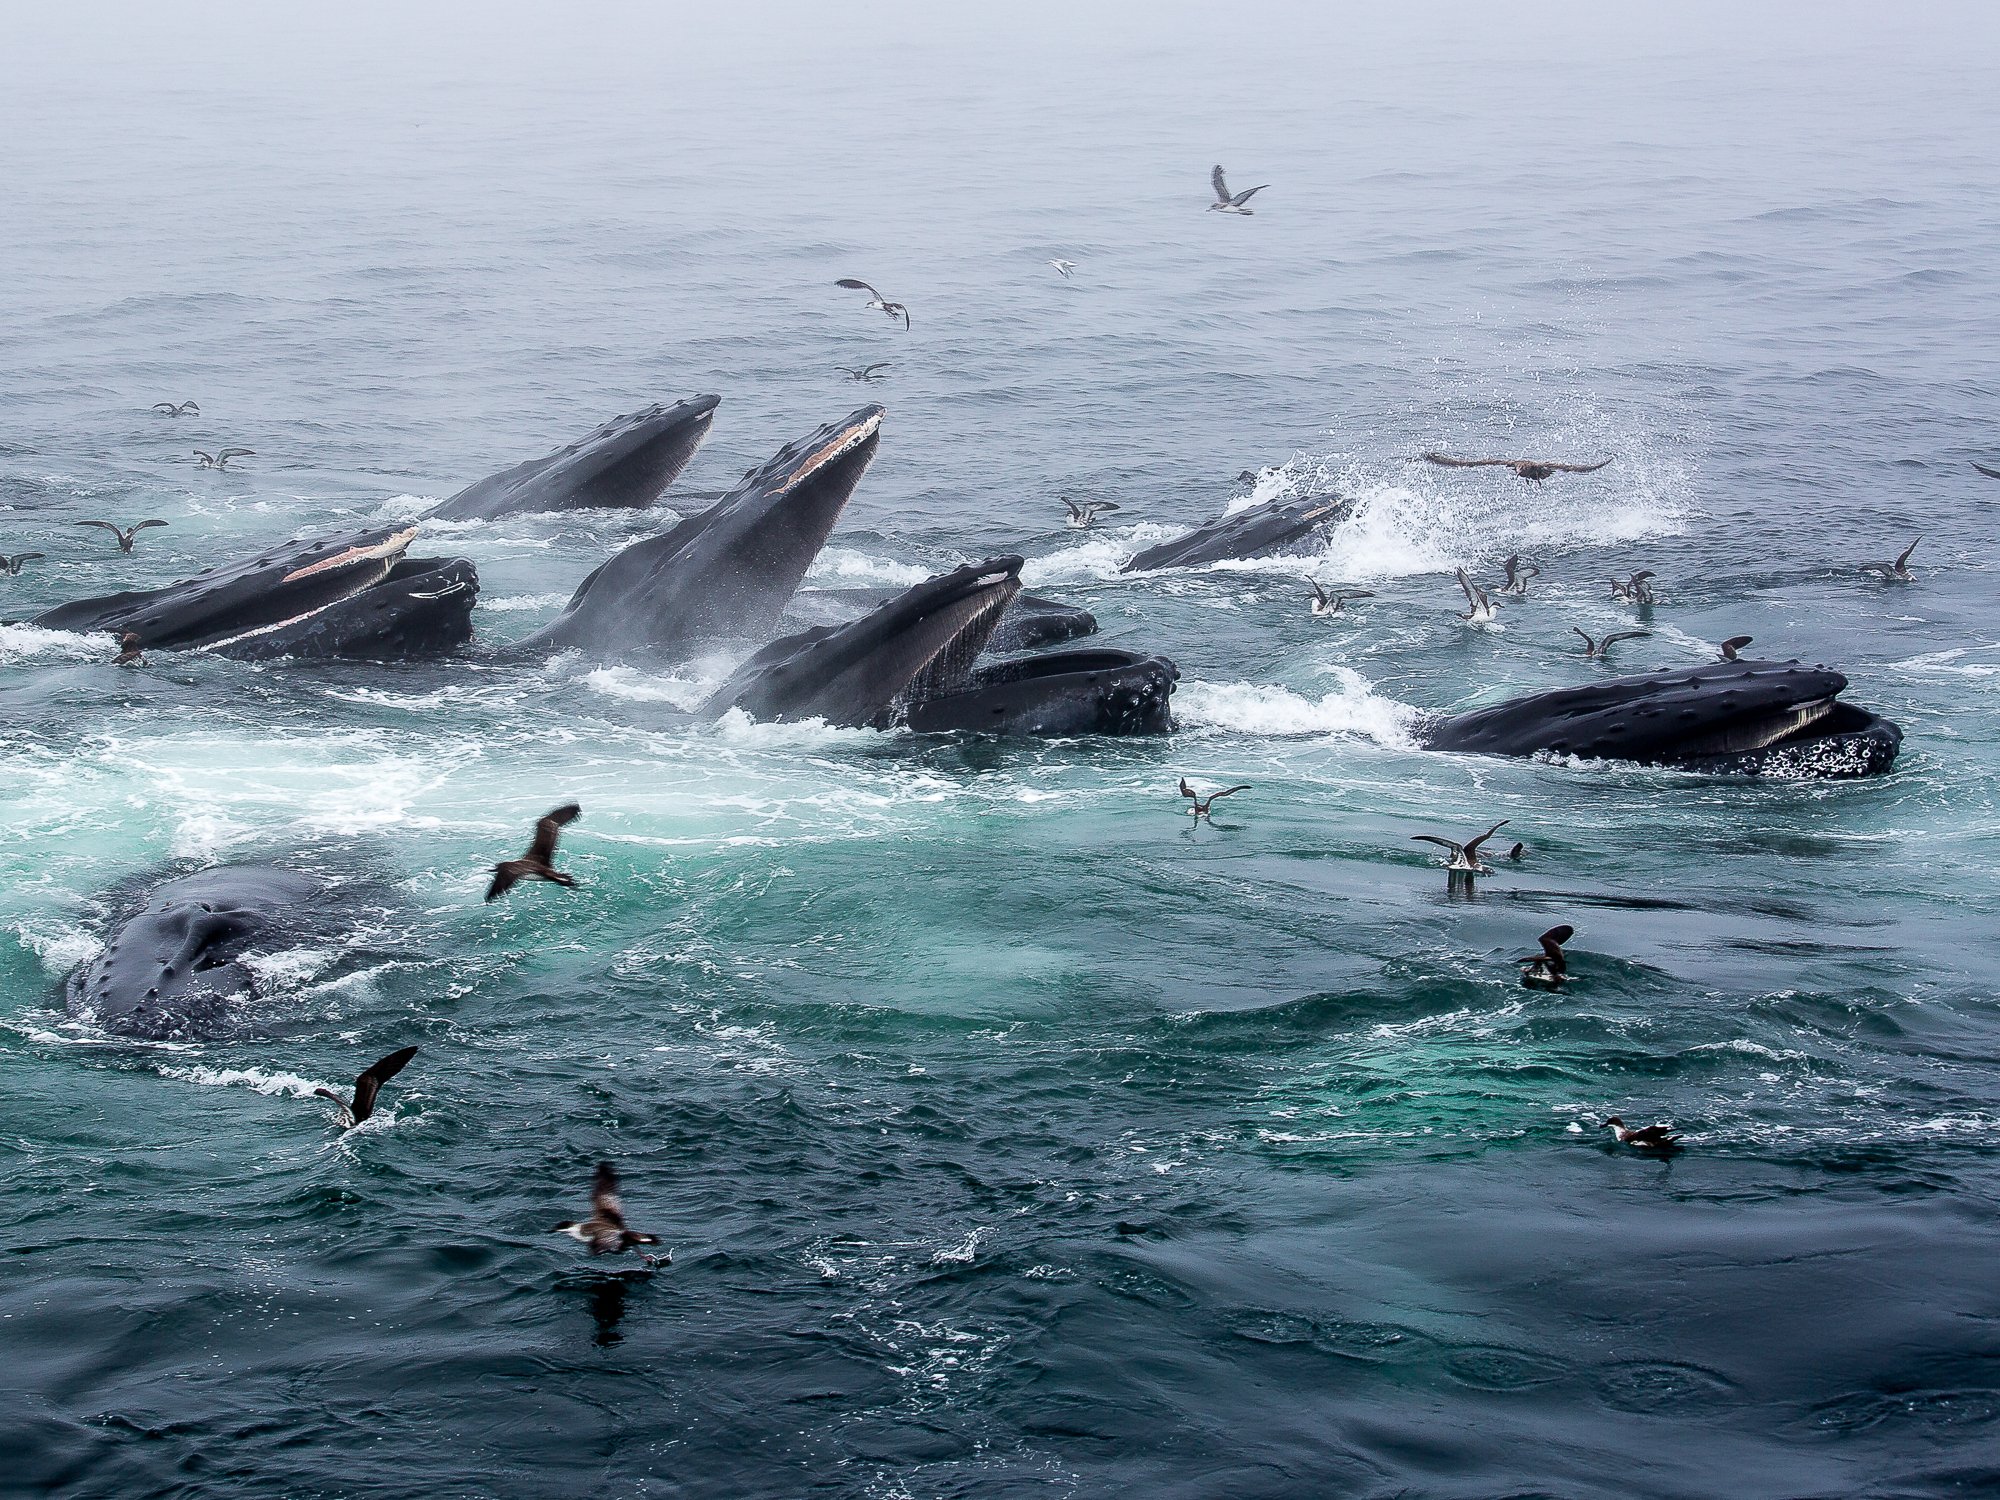 A feeding frenzy of Humpback Whales off Cape Cod